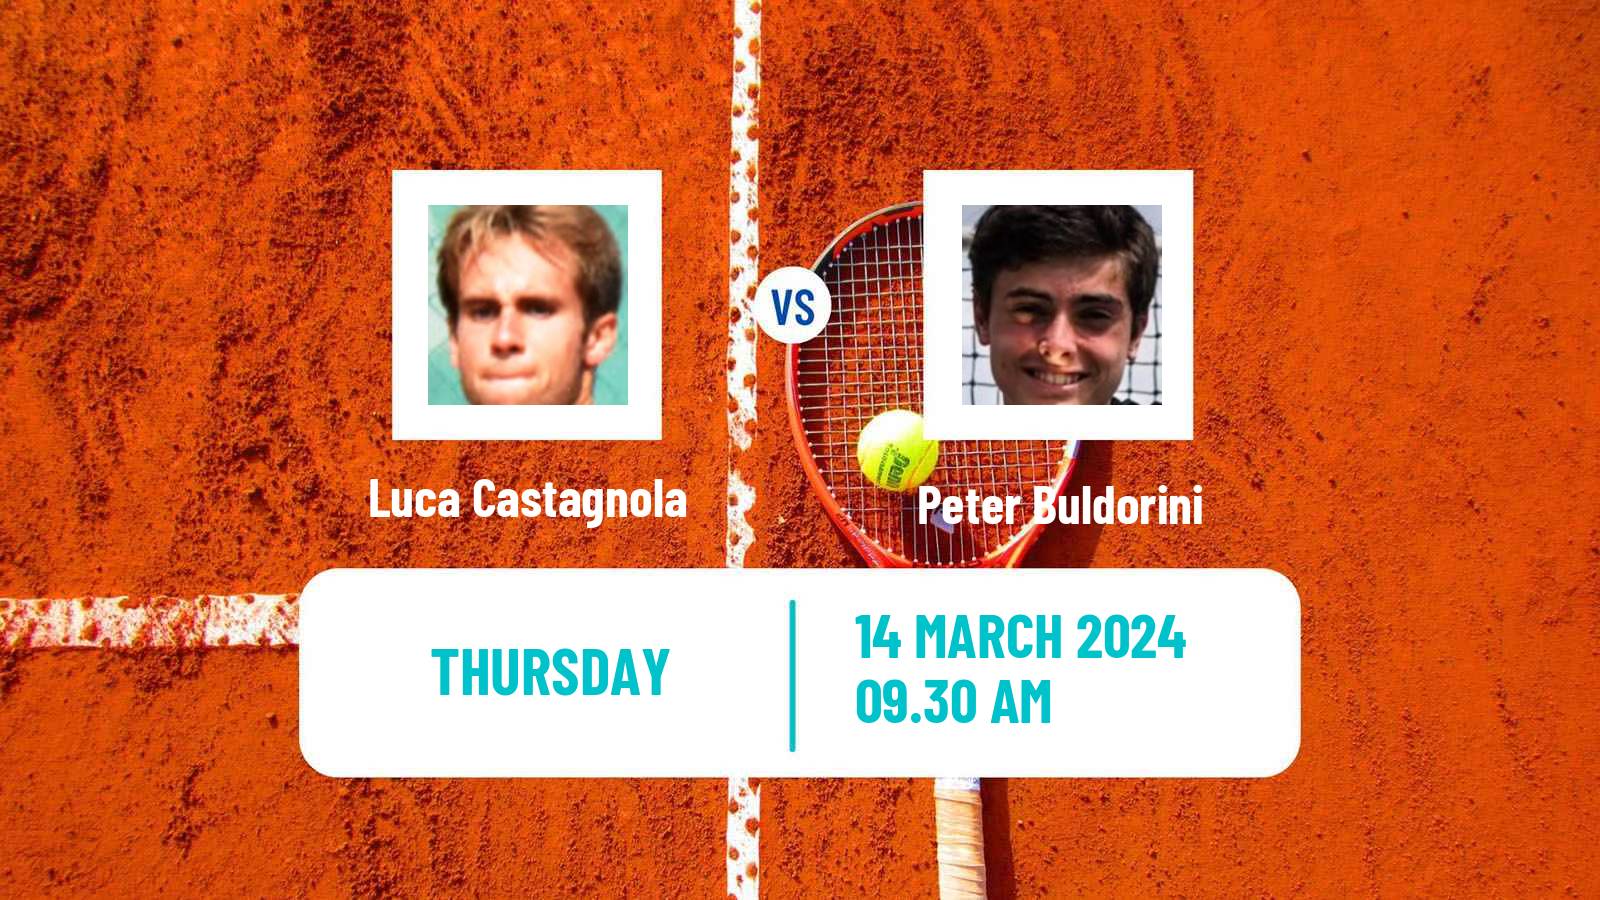 Tennis ITF M15 Monastir 11 Men Luca Castagnola - Peter Buldorini